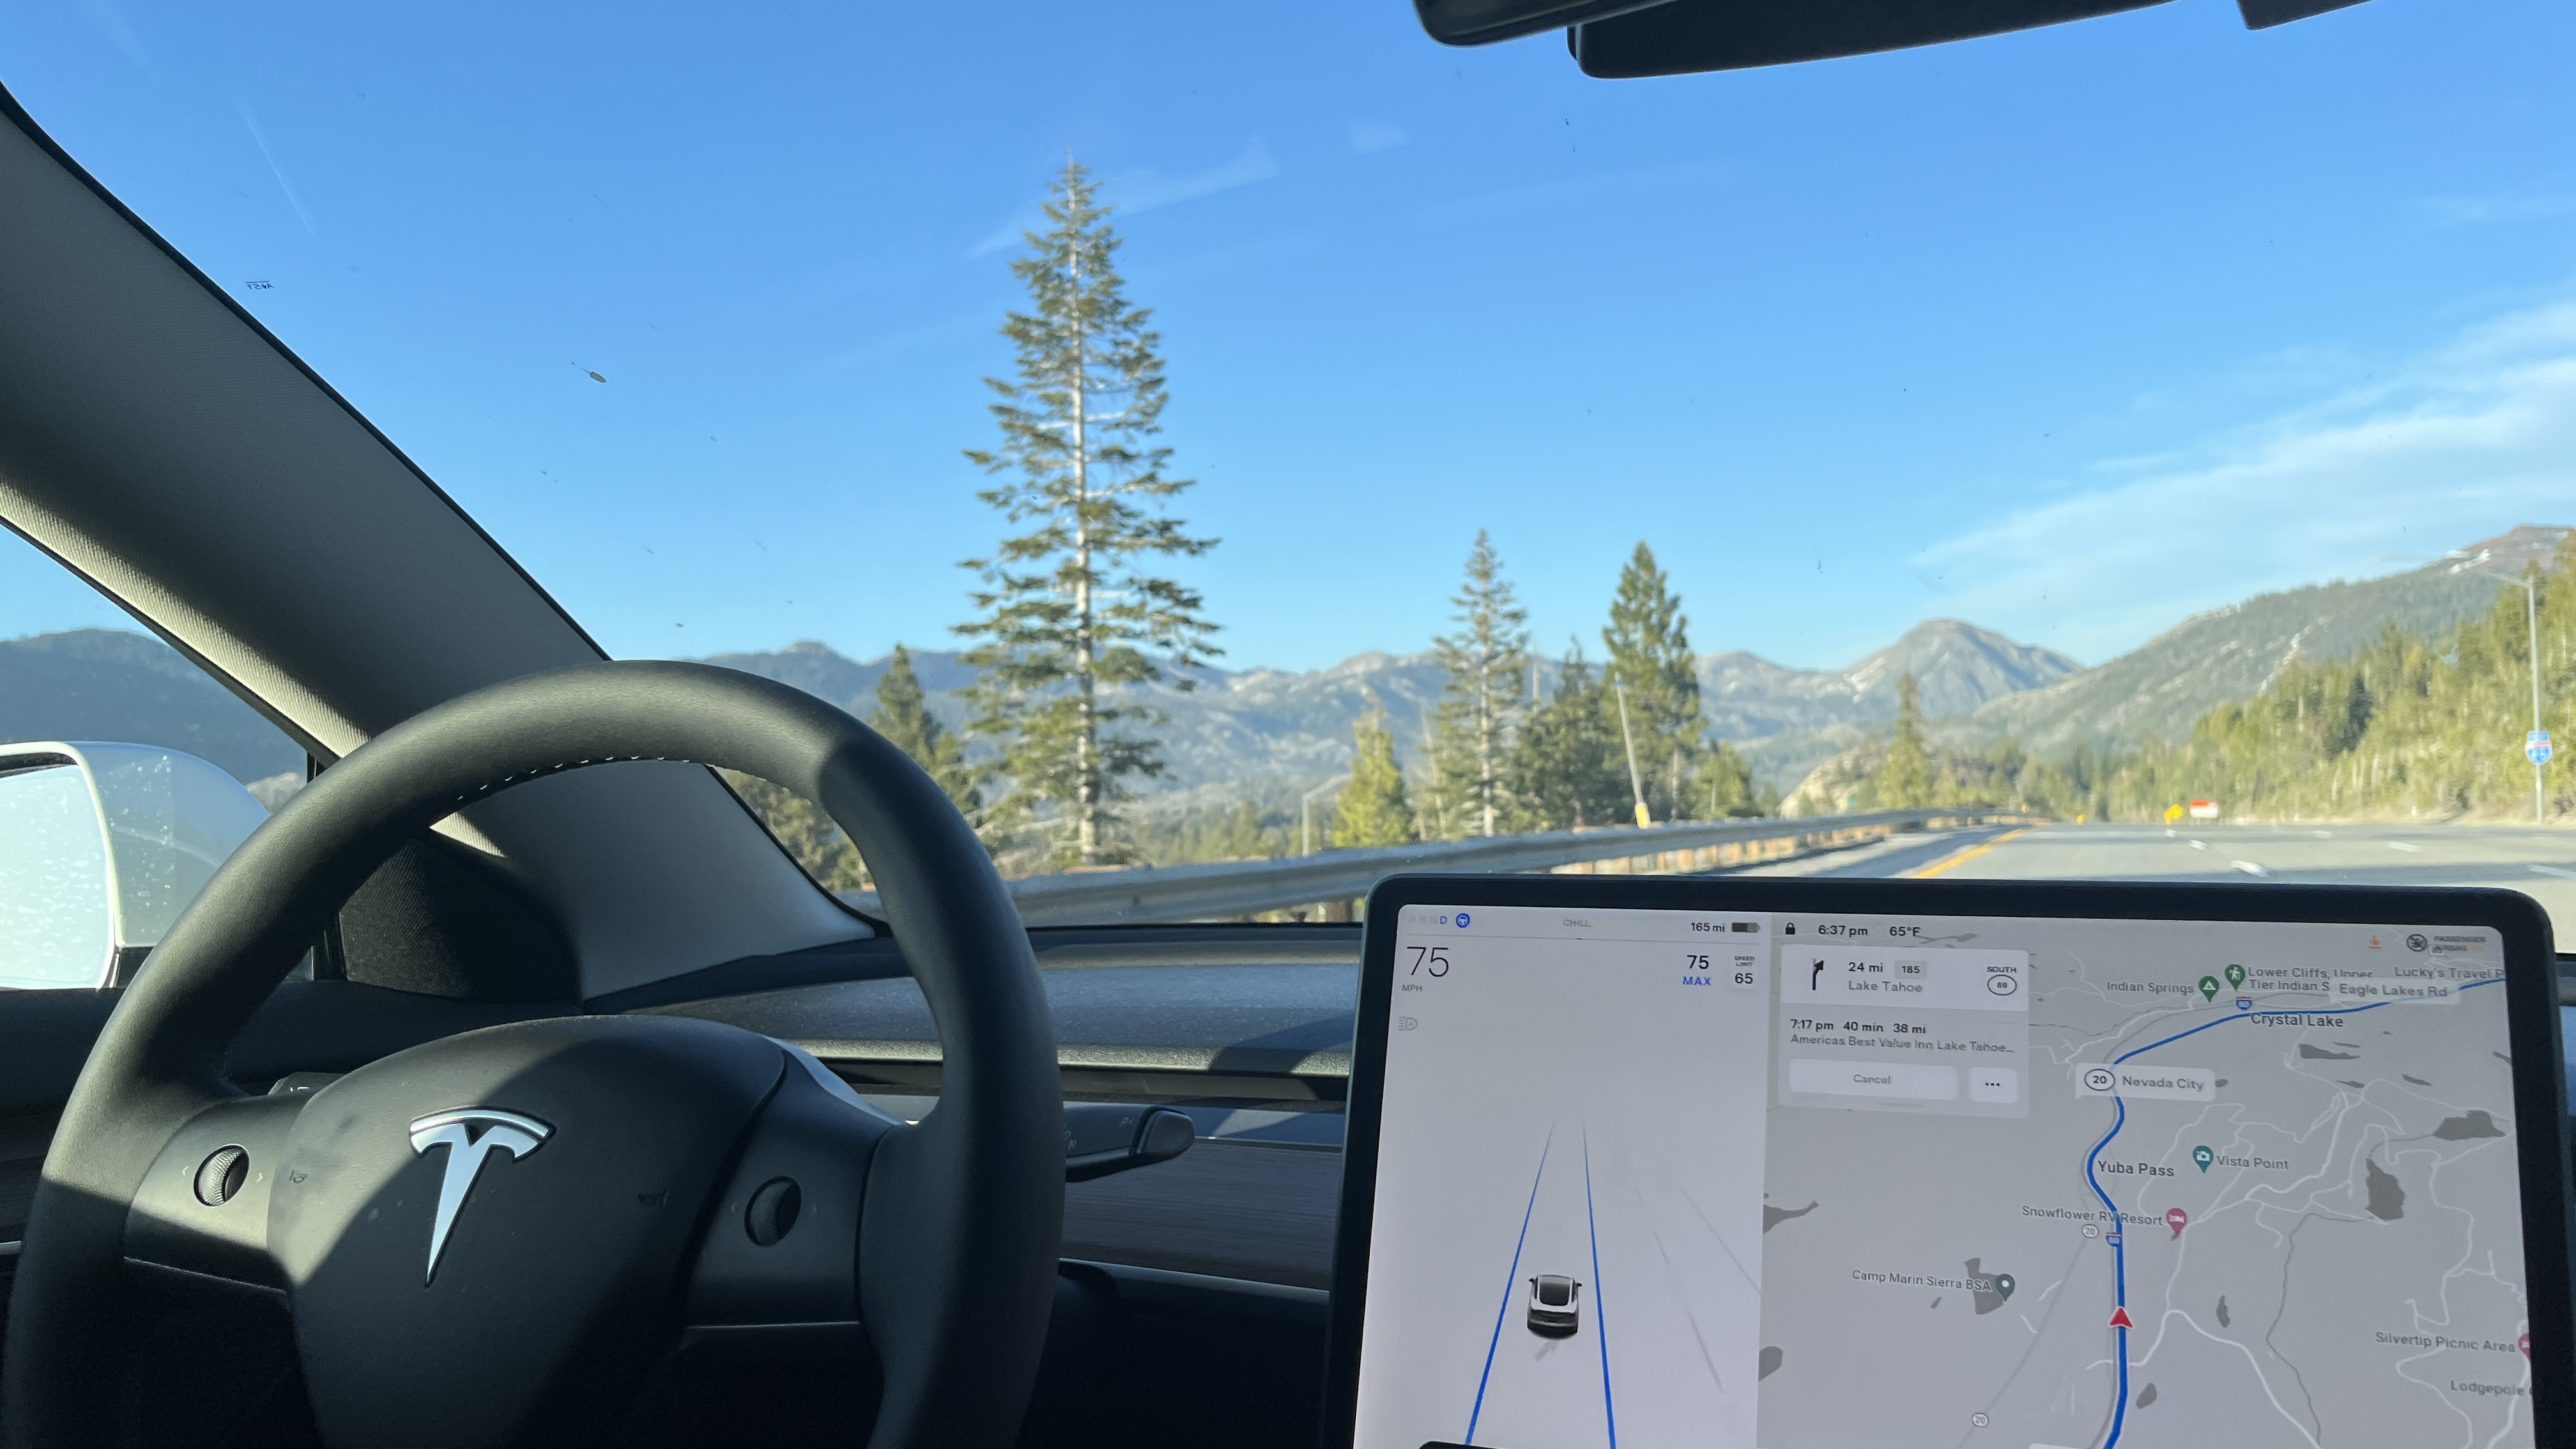 https://upload.wikimedia.org/wikipedia/commons/d/d6/Tesla_Autopilot_engaged_on_I-80_near_Lake_Tahoe.jpg